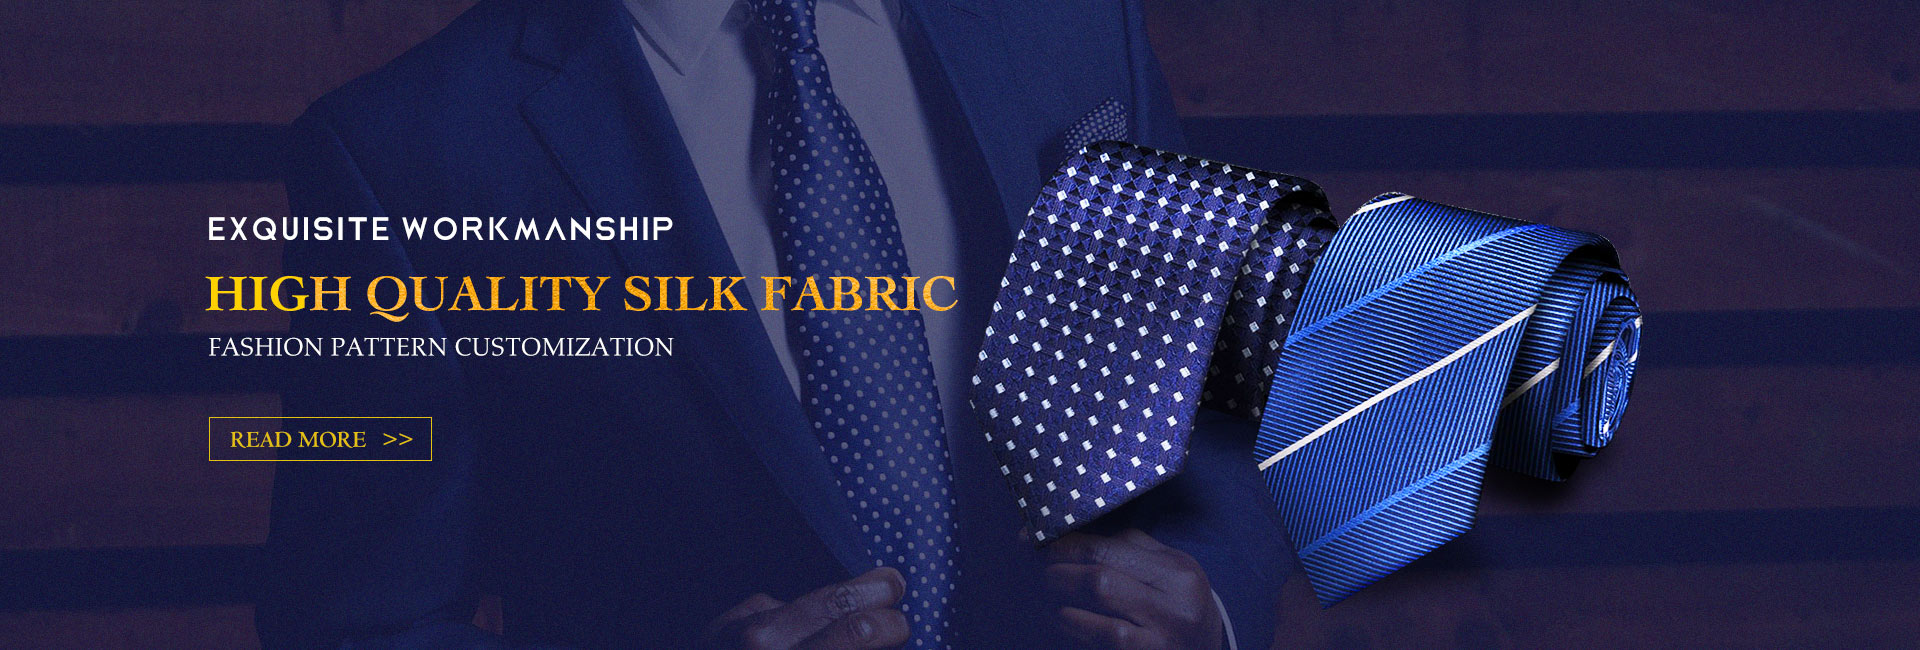 High quality silk fabric Exquisite workmanship Fashion pattern customization